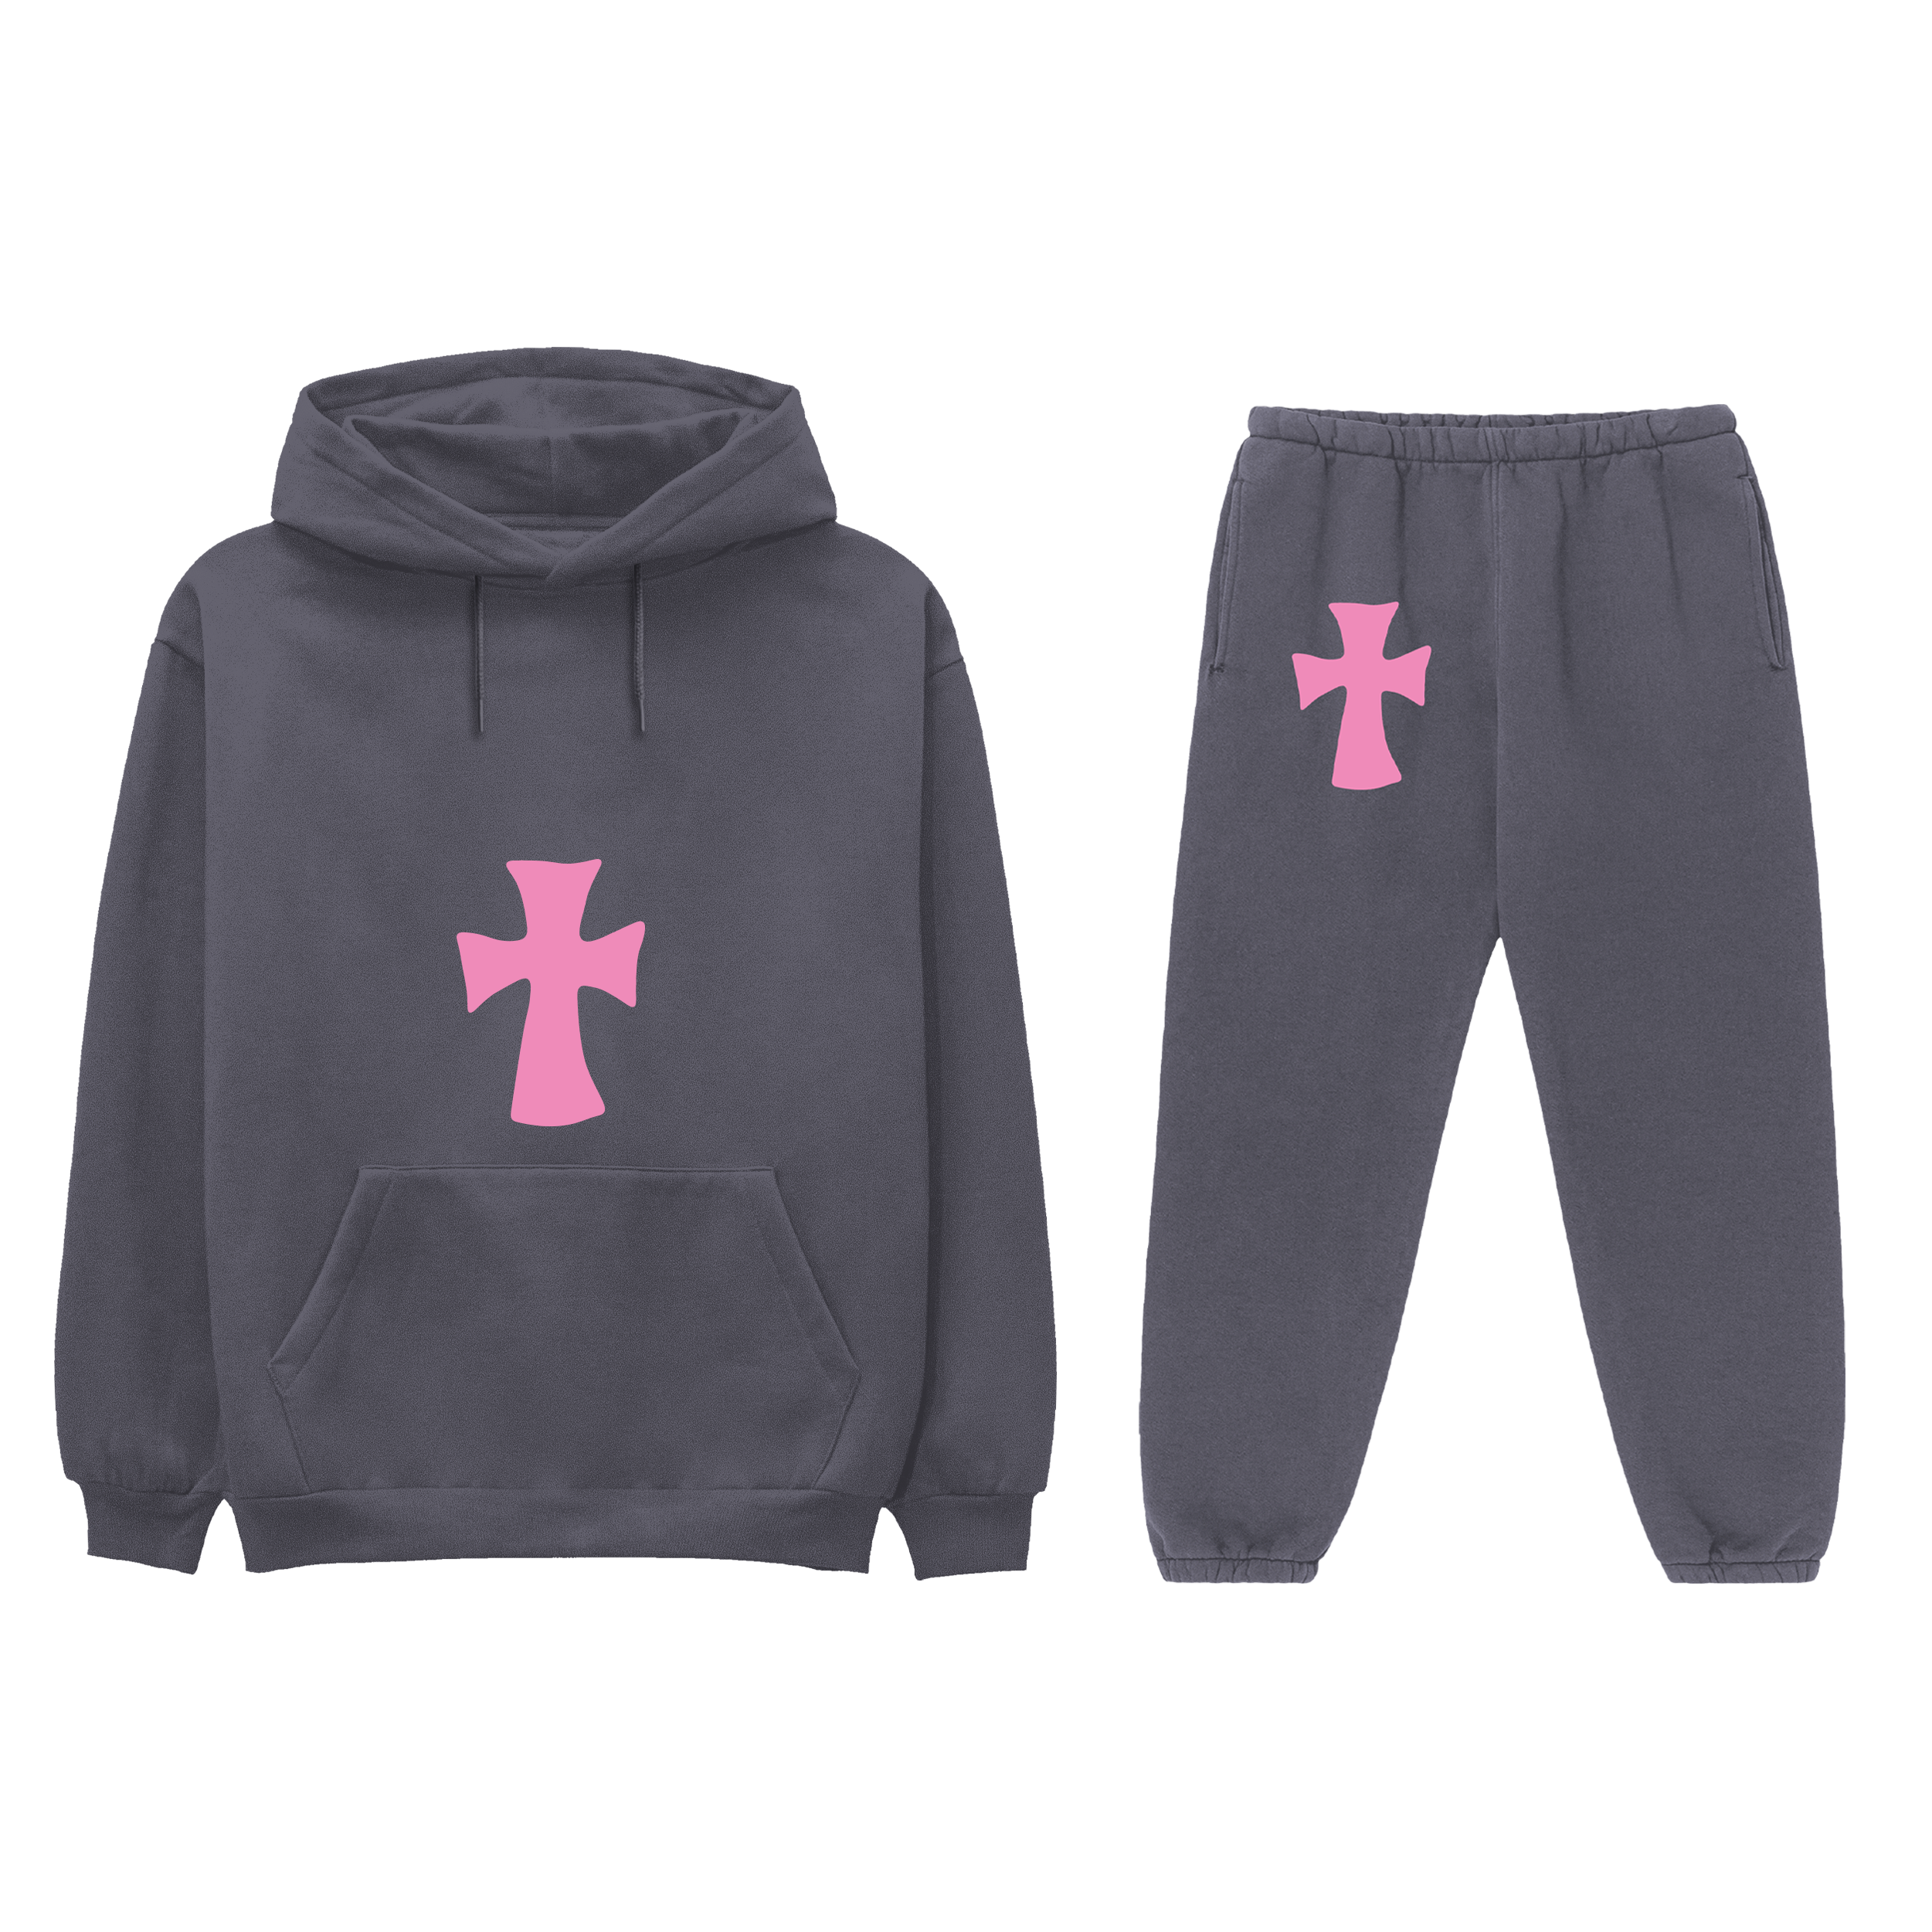 Pink Cross Hoodie and Sweats – Lil Uzi Vert